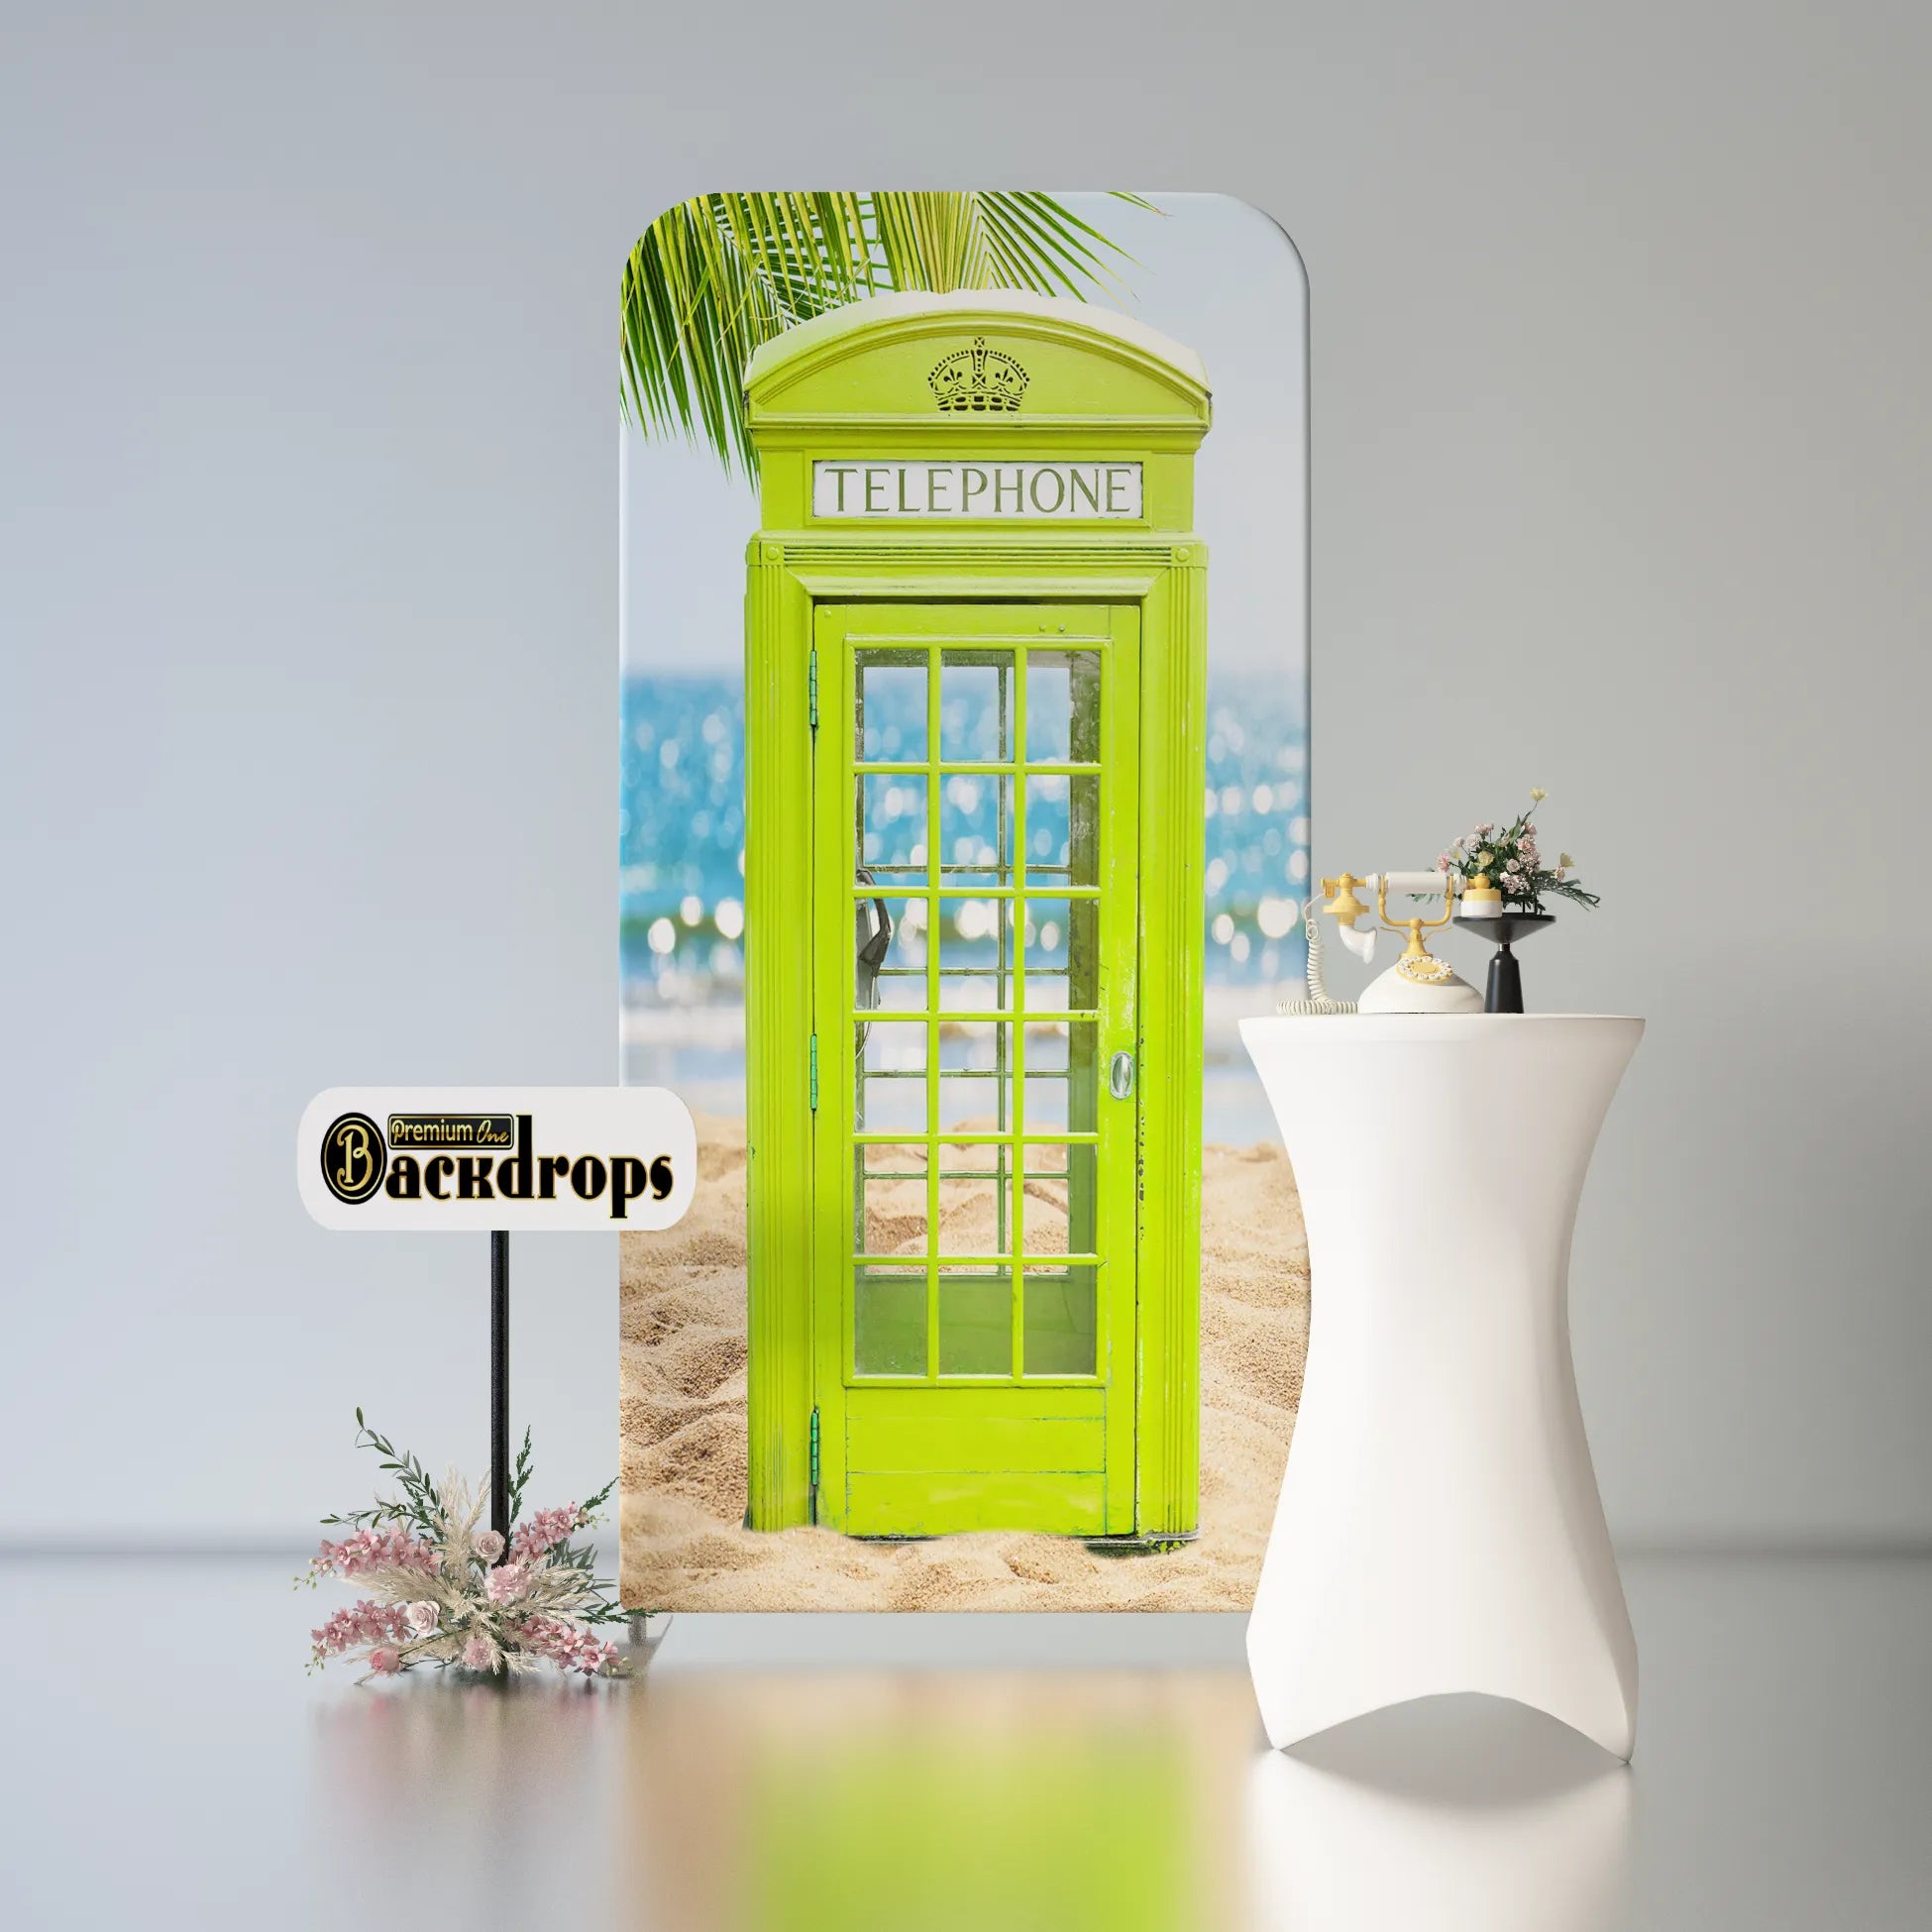 Telephone Booth Design 35